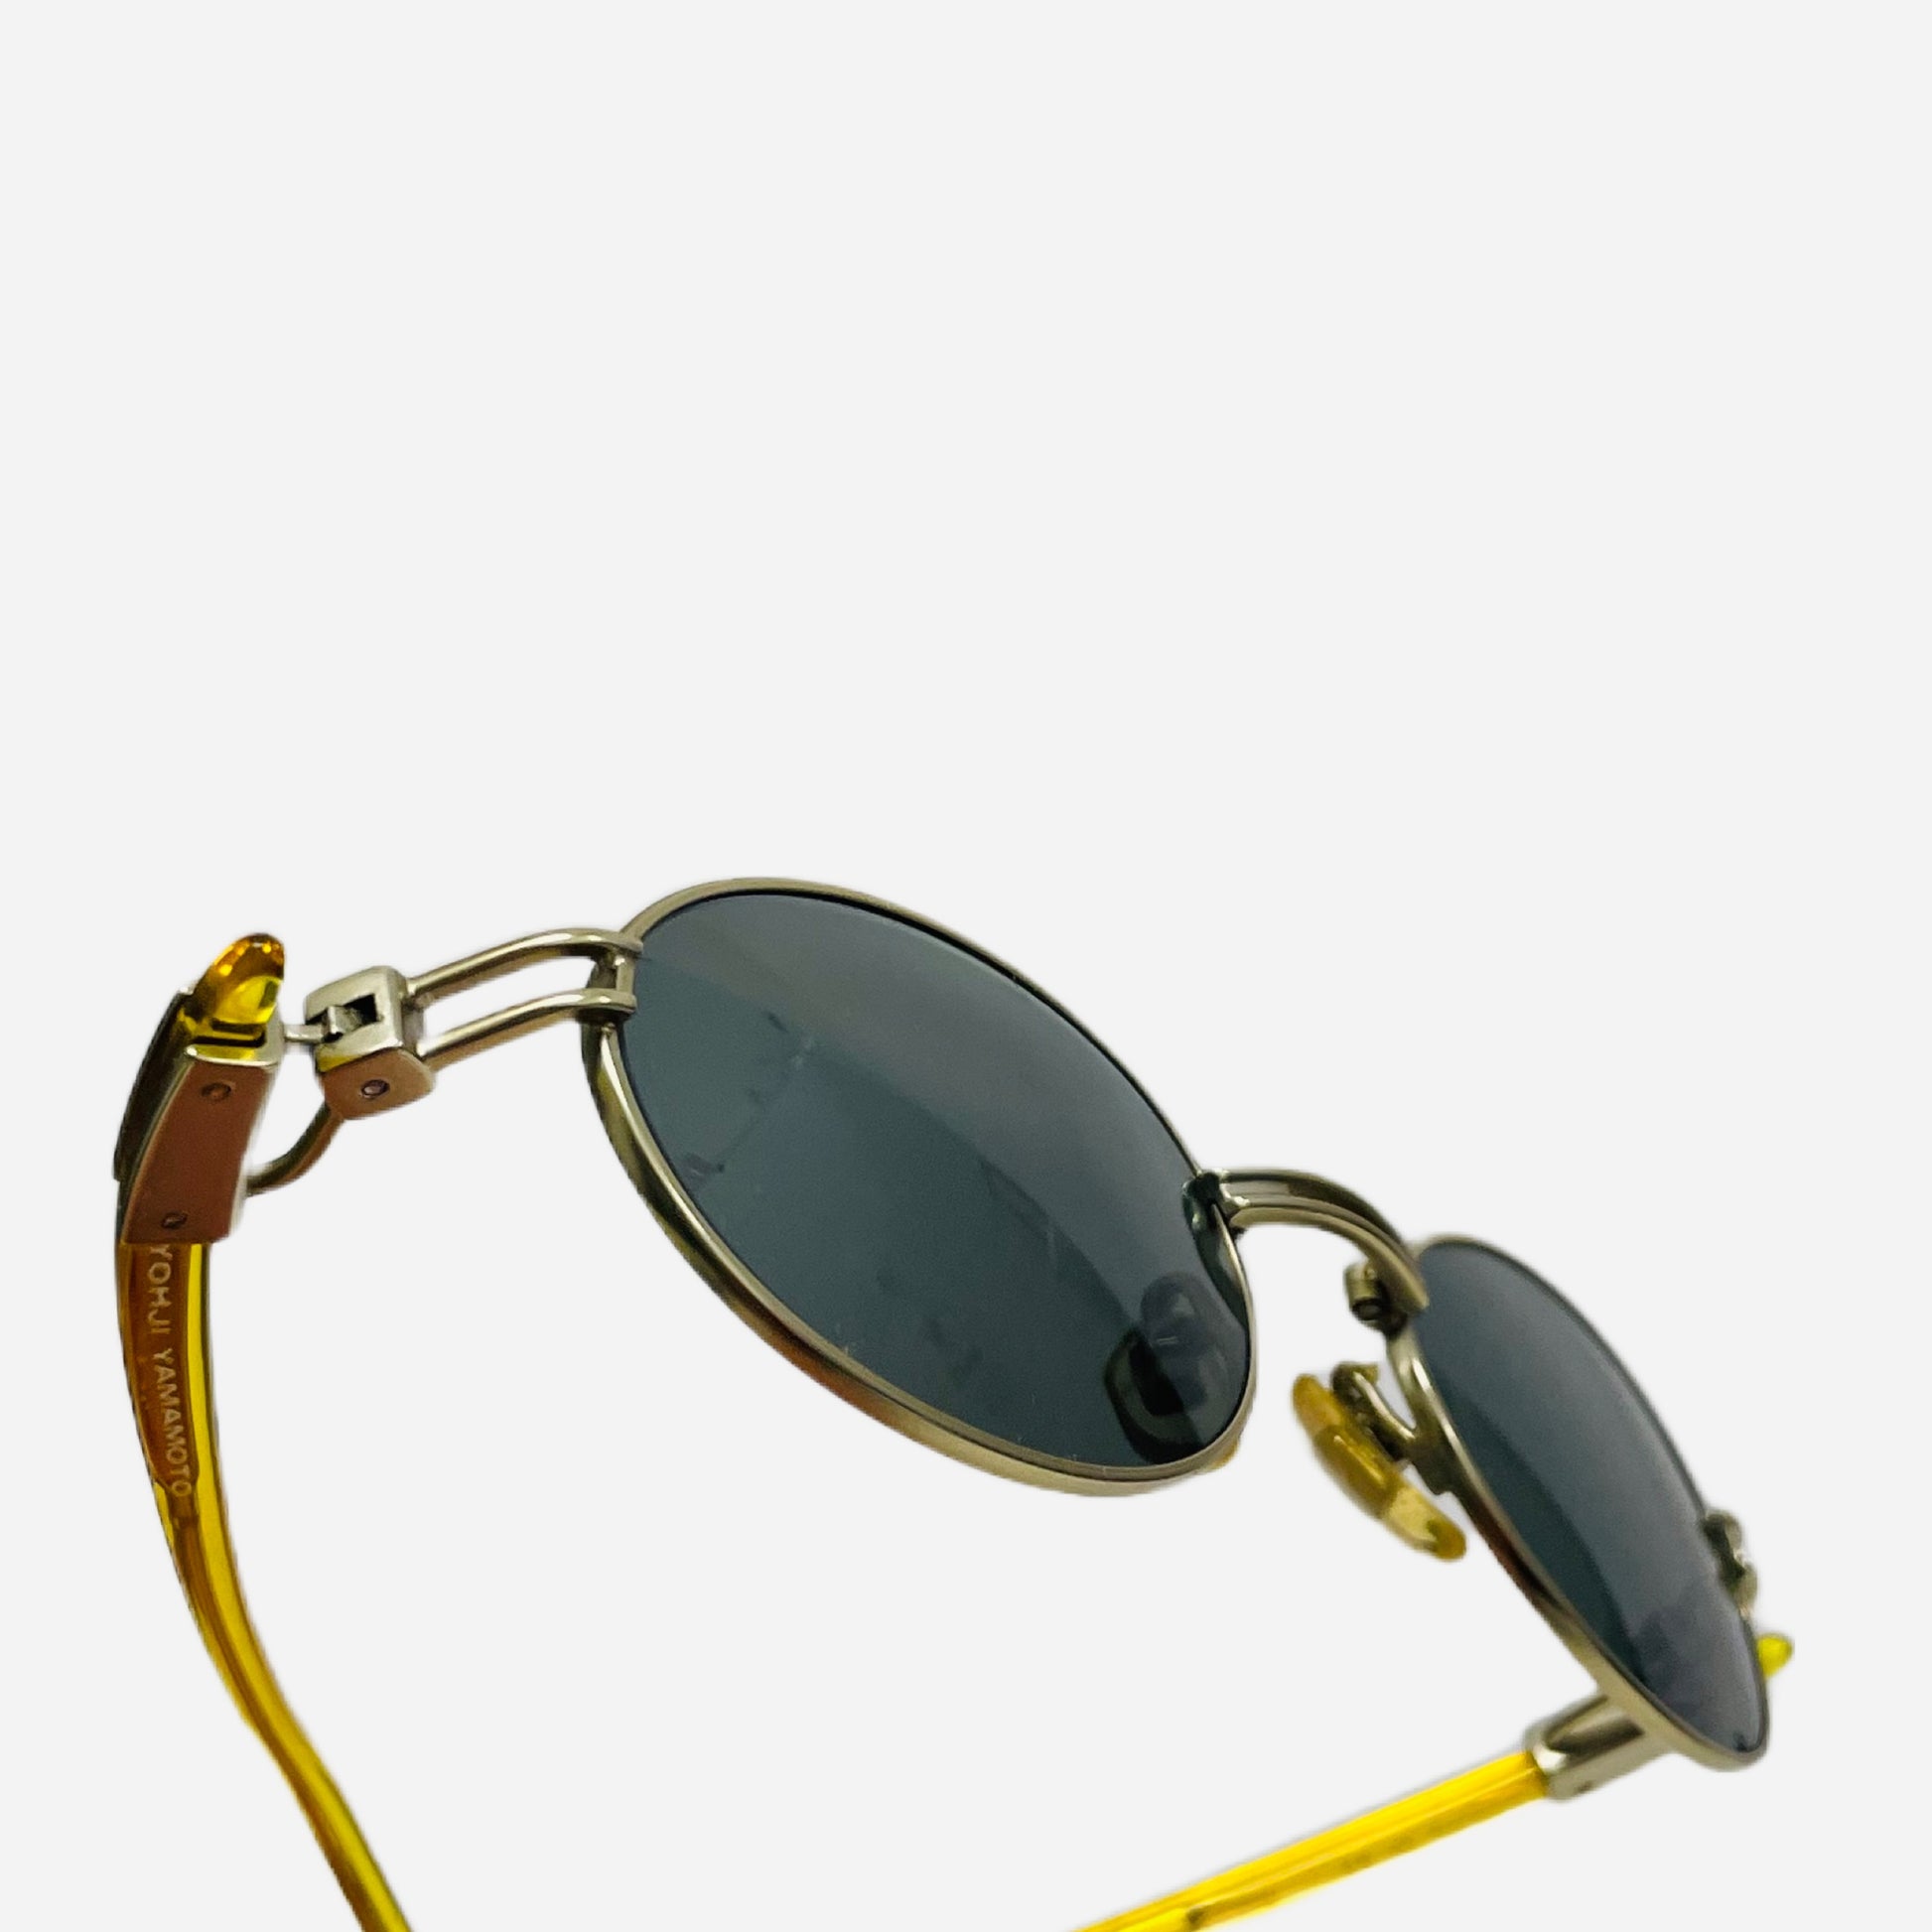 Vintage-Yohji-Yamamoto-Sonnenbrille-Sunglasses-52-7202-the-seekers-up